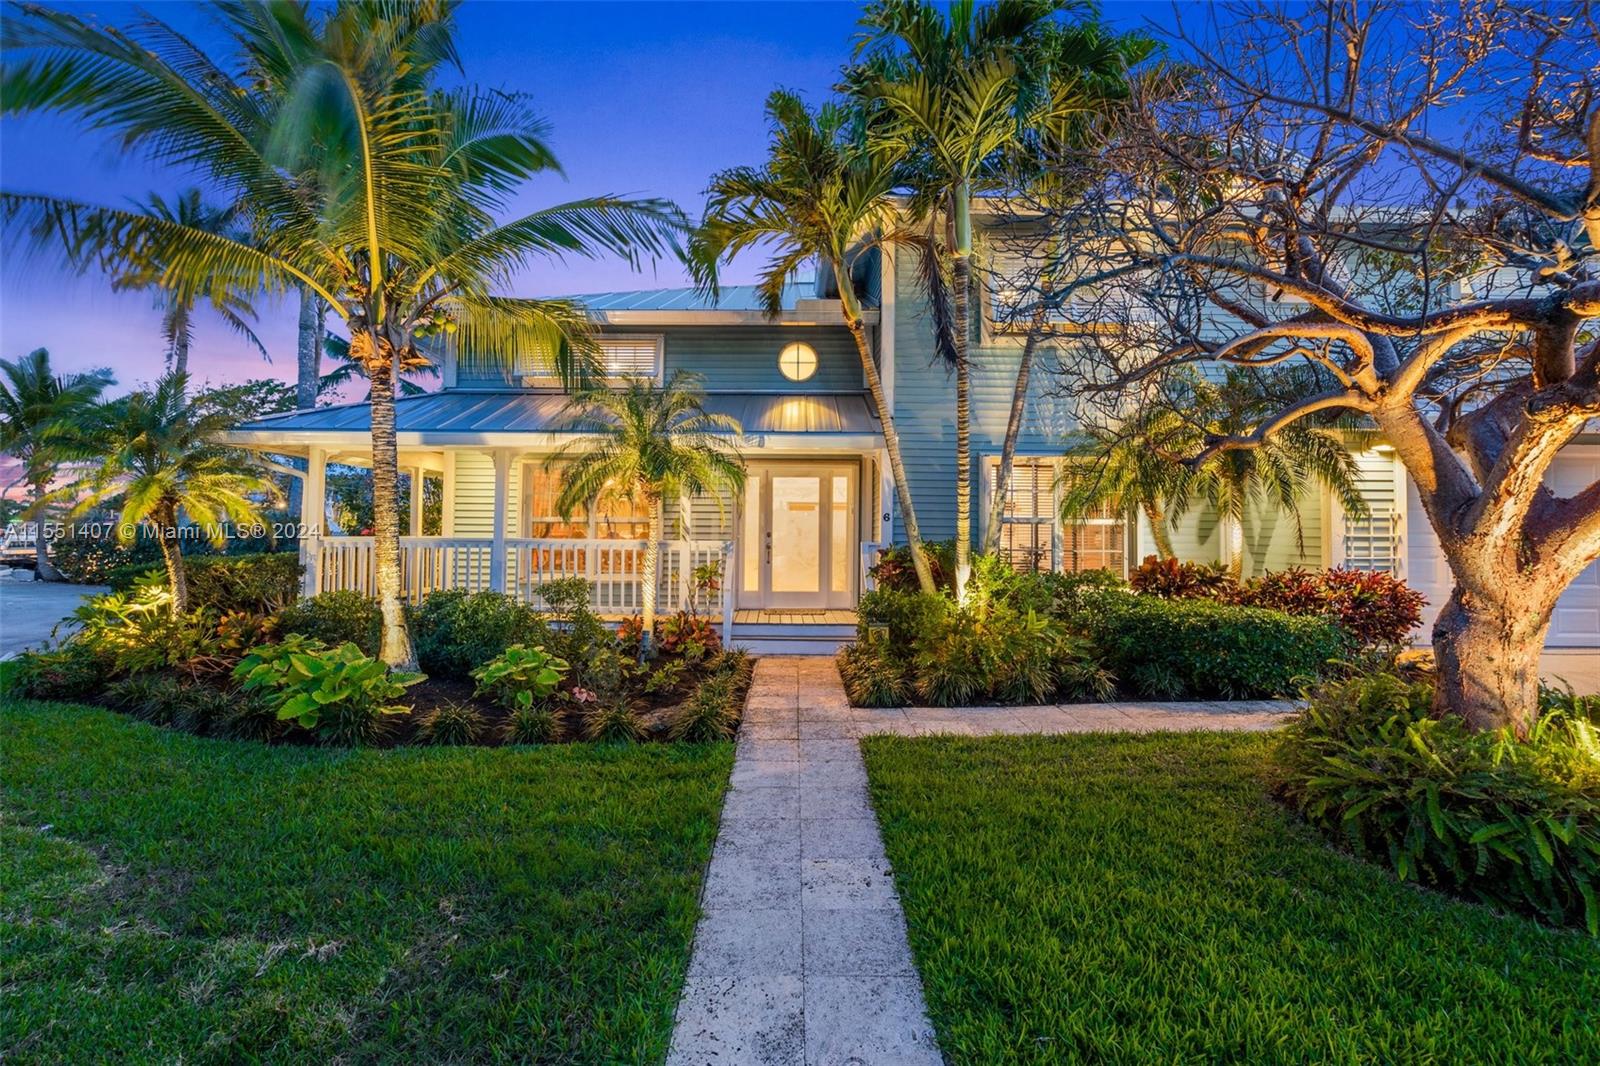 Property for Sale at 6 Kepner Dr, Boynton Beach, Palm Beach County, Florida - Bedrooms: 5 
Bathrooms: 4.5  - $2,950,000